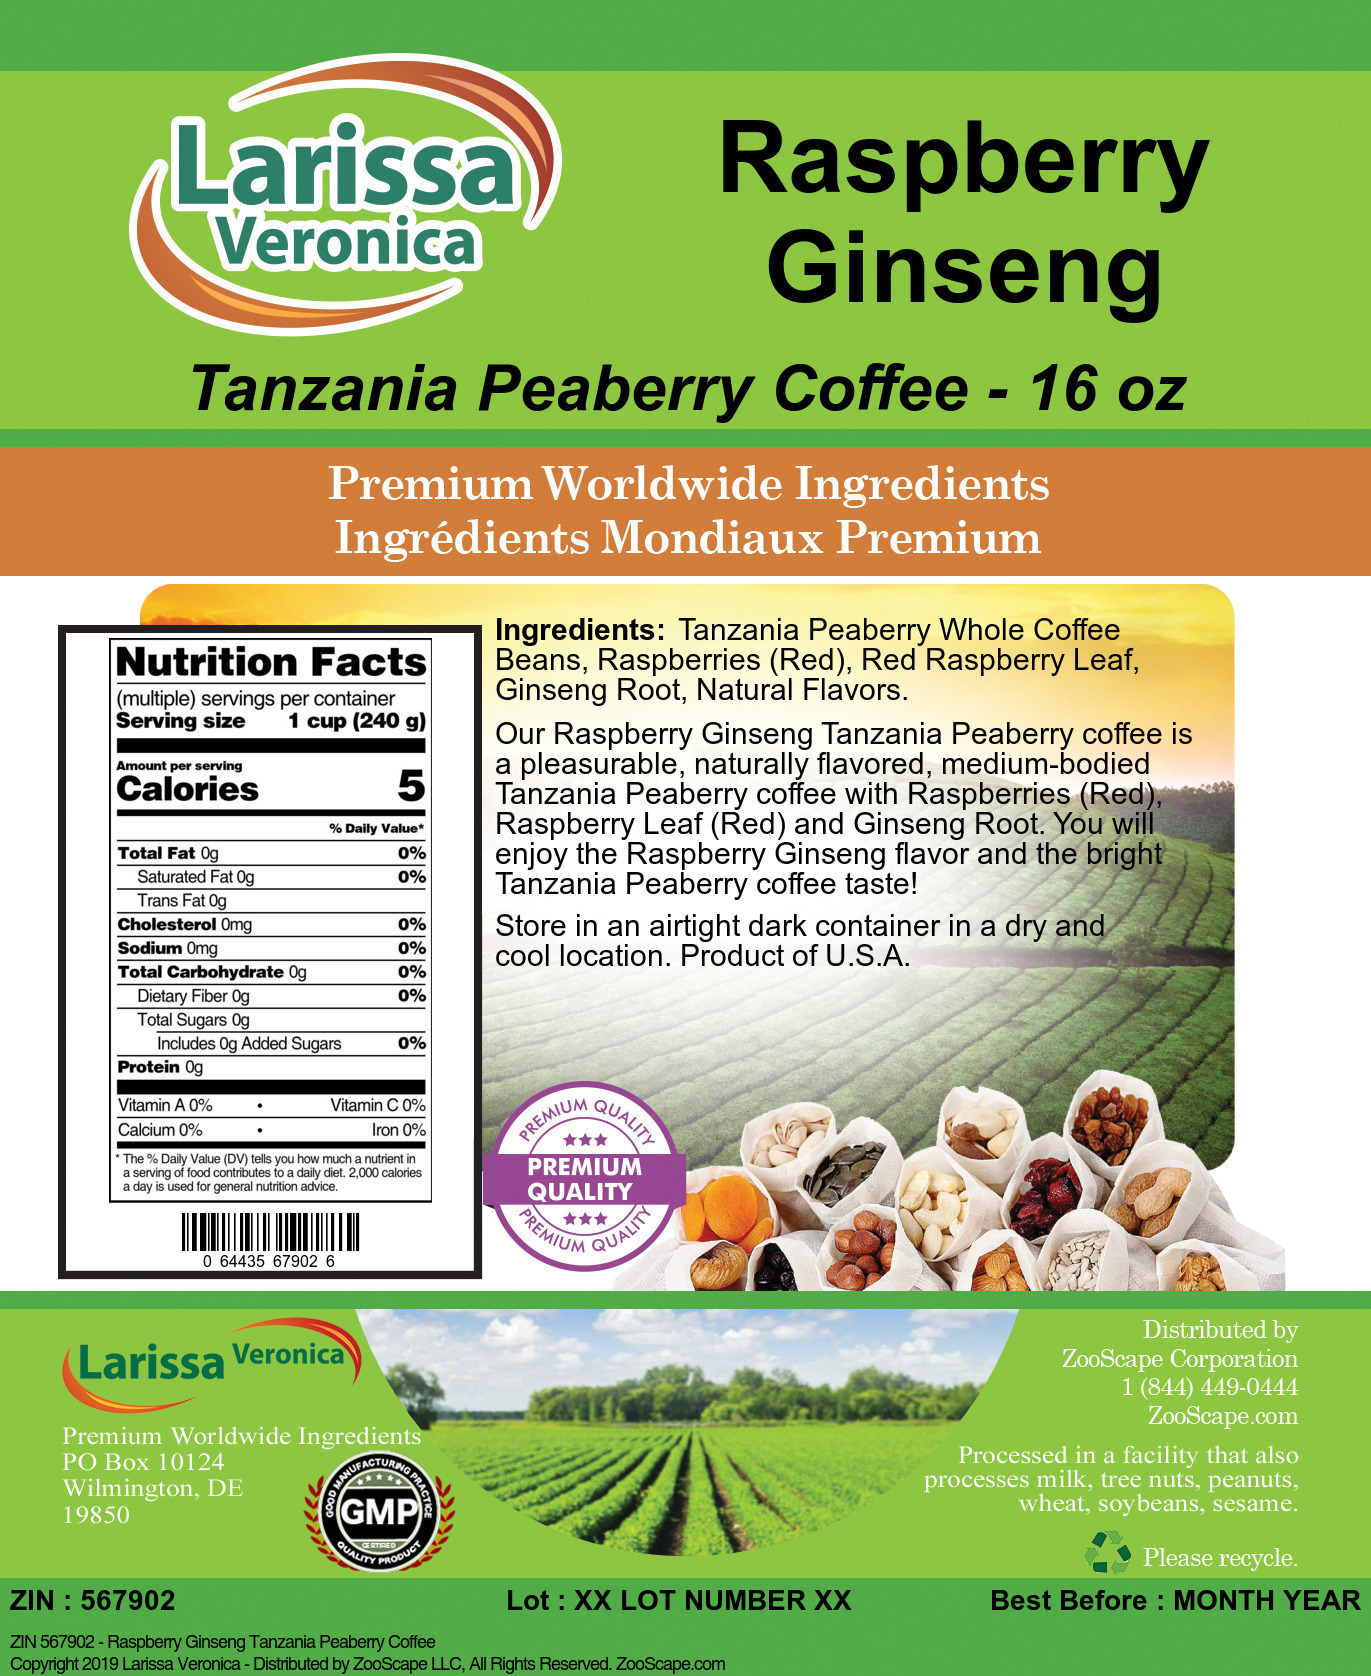 Raspberry Ginseng Tanzania Peaberry Coffee - Label